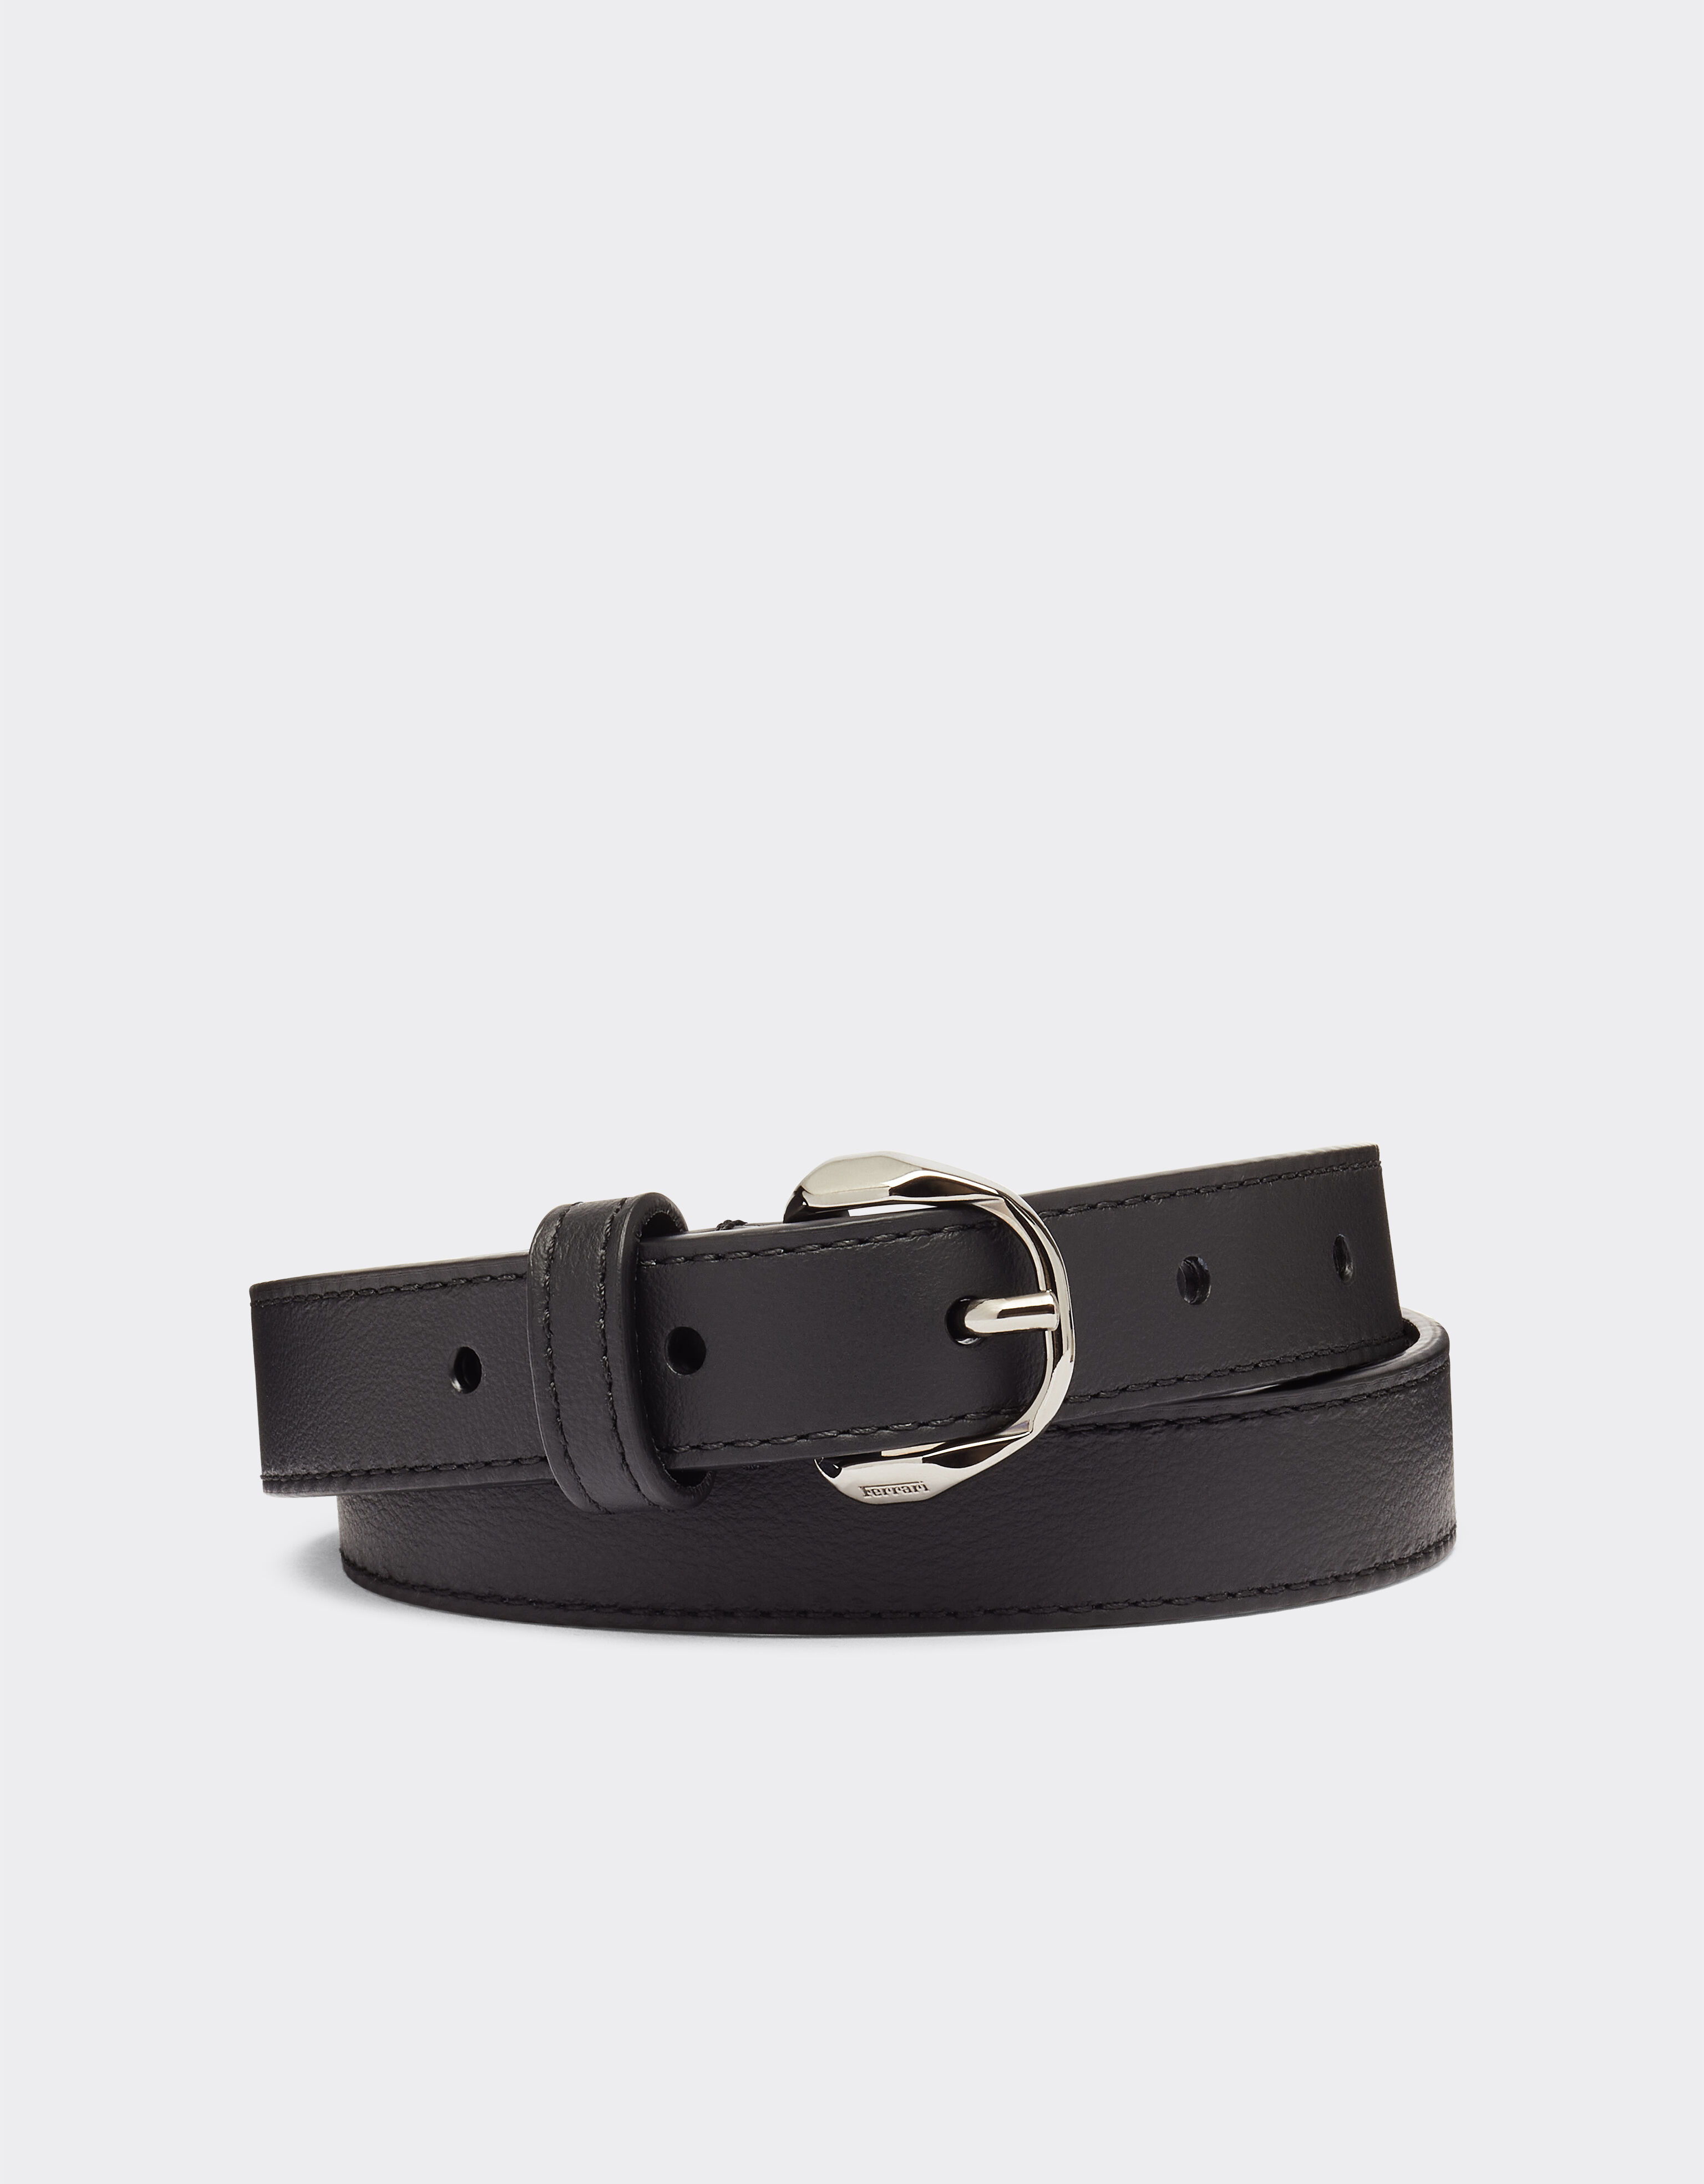 Ferrari Thin leather belt with Prancing Horse detail Black 47110f